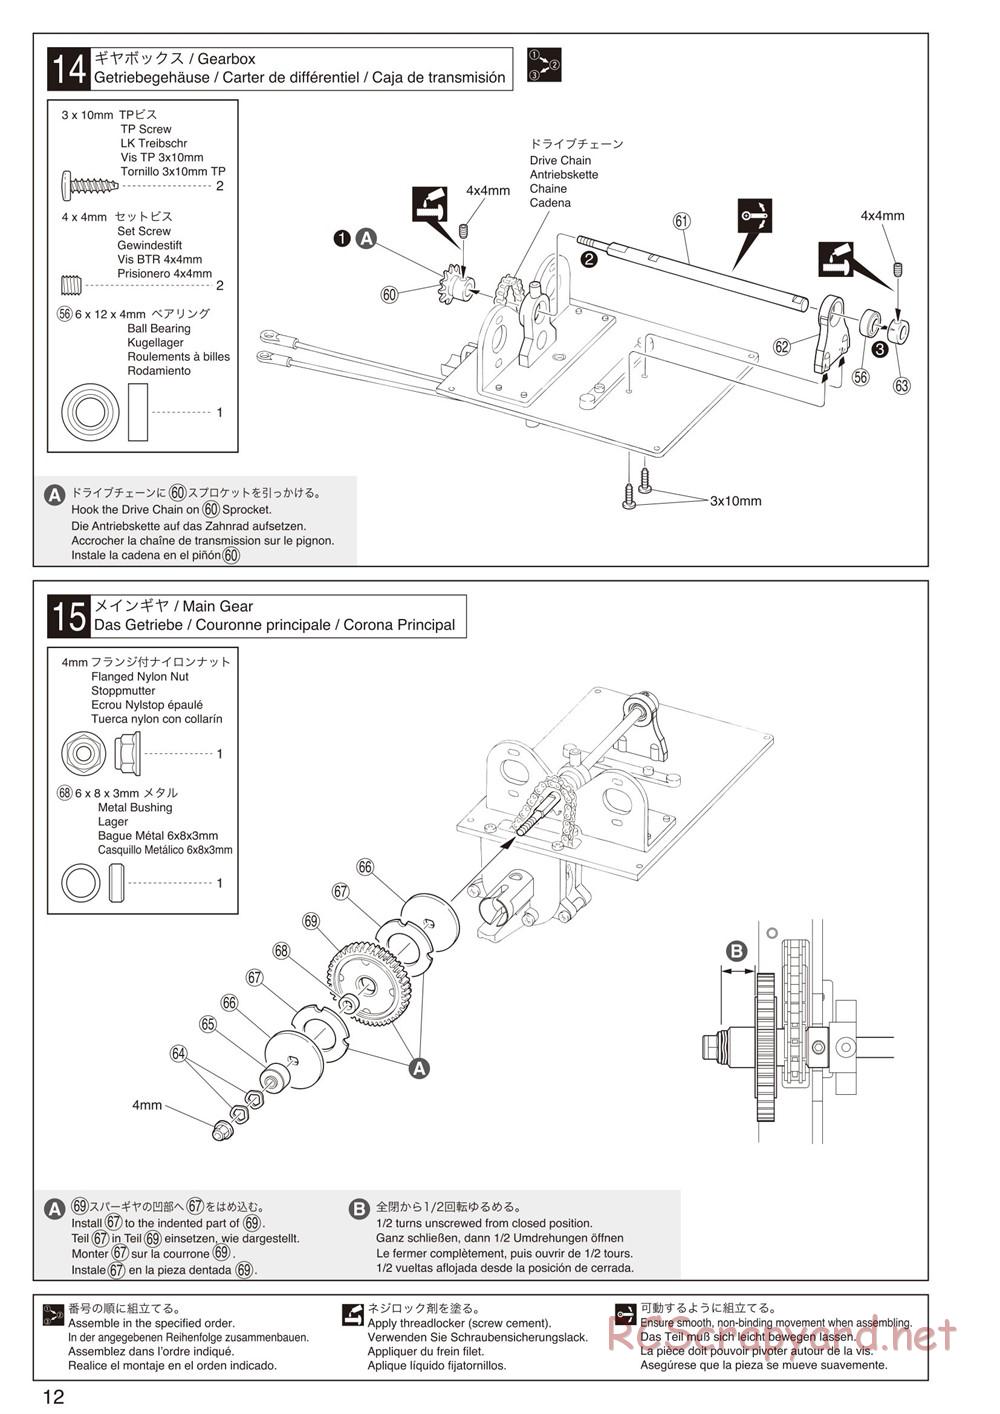 Kyosho - Mad Force Kruiser 2.0 VE - Manual - Page 12